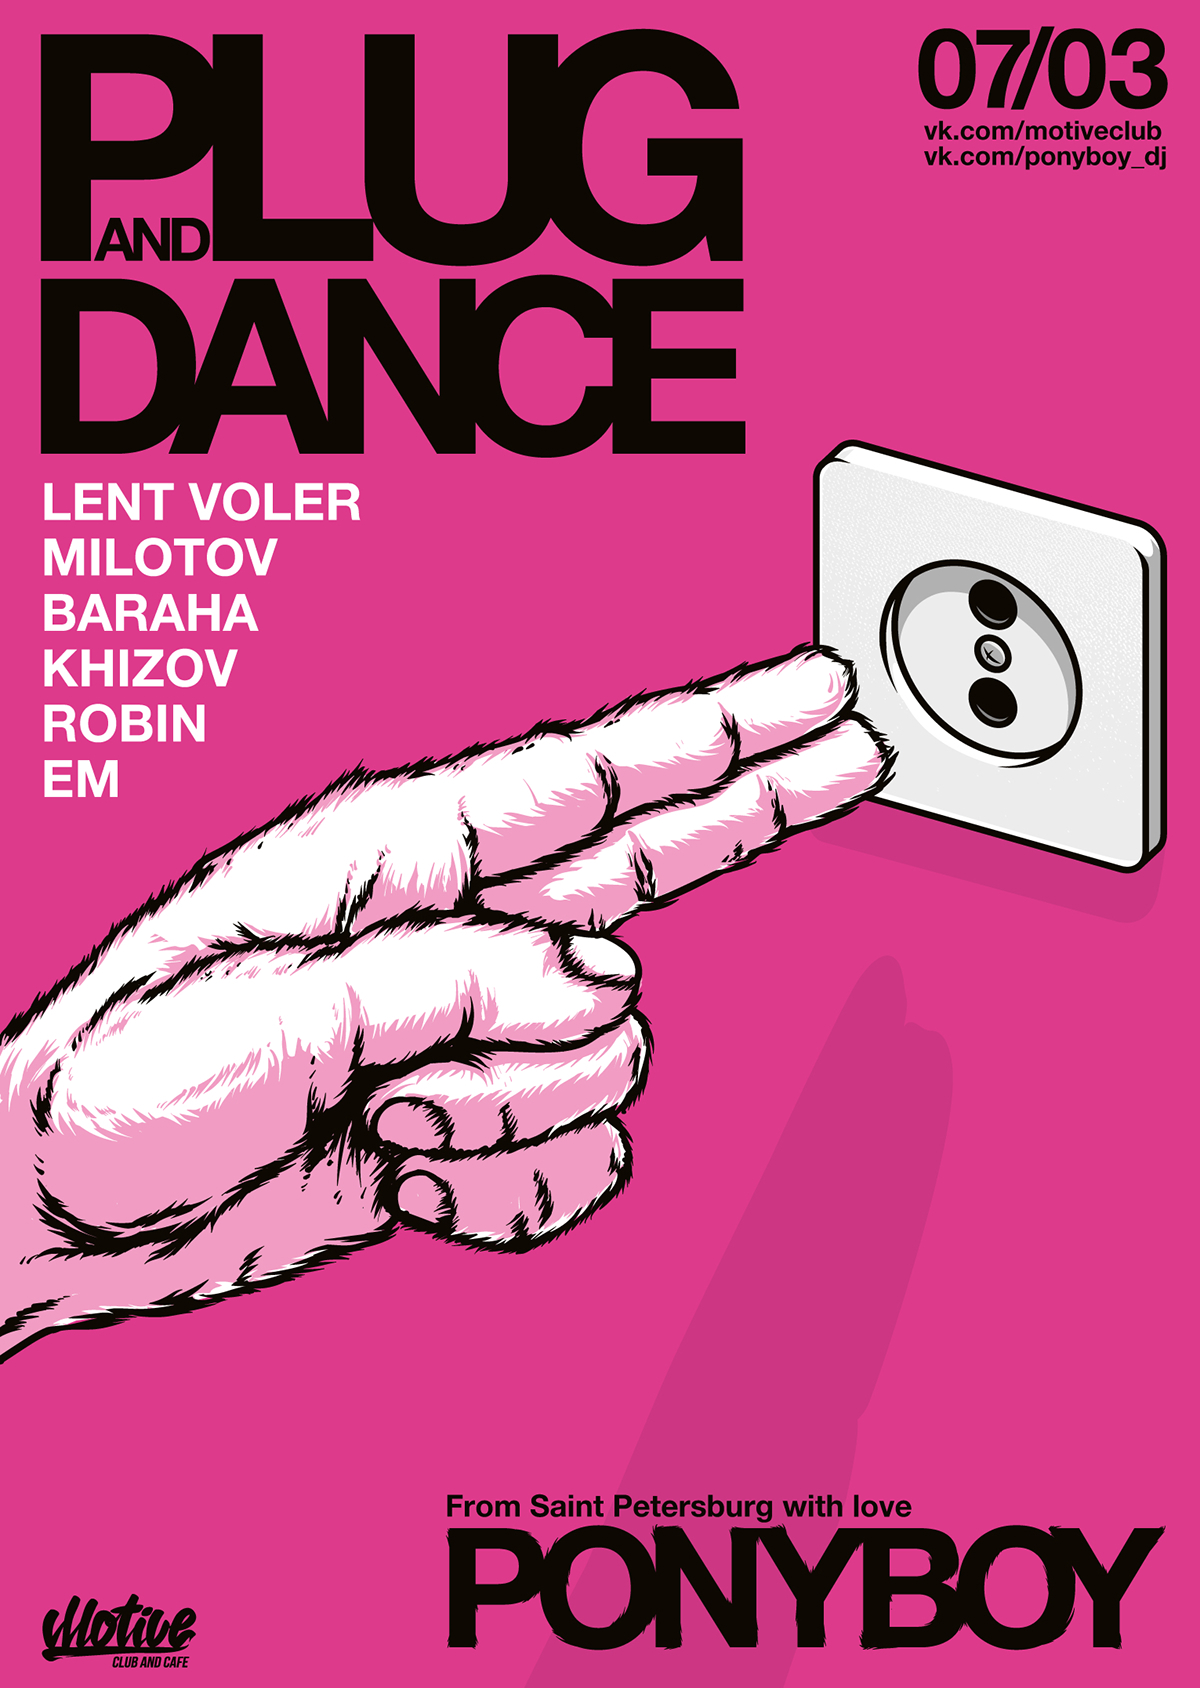 Event poster DANCE   party nightclub art